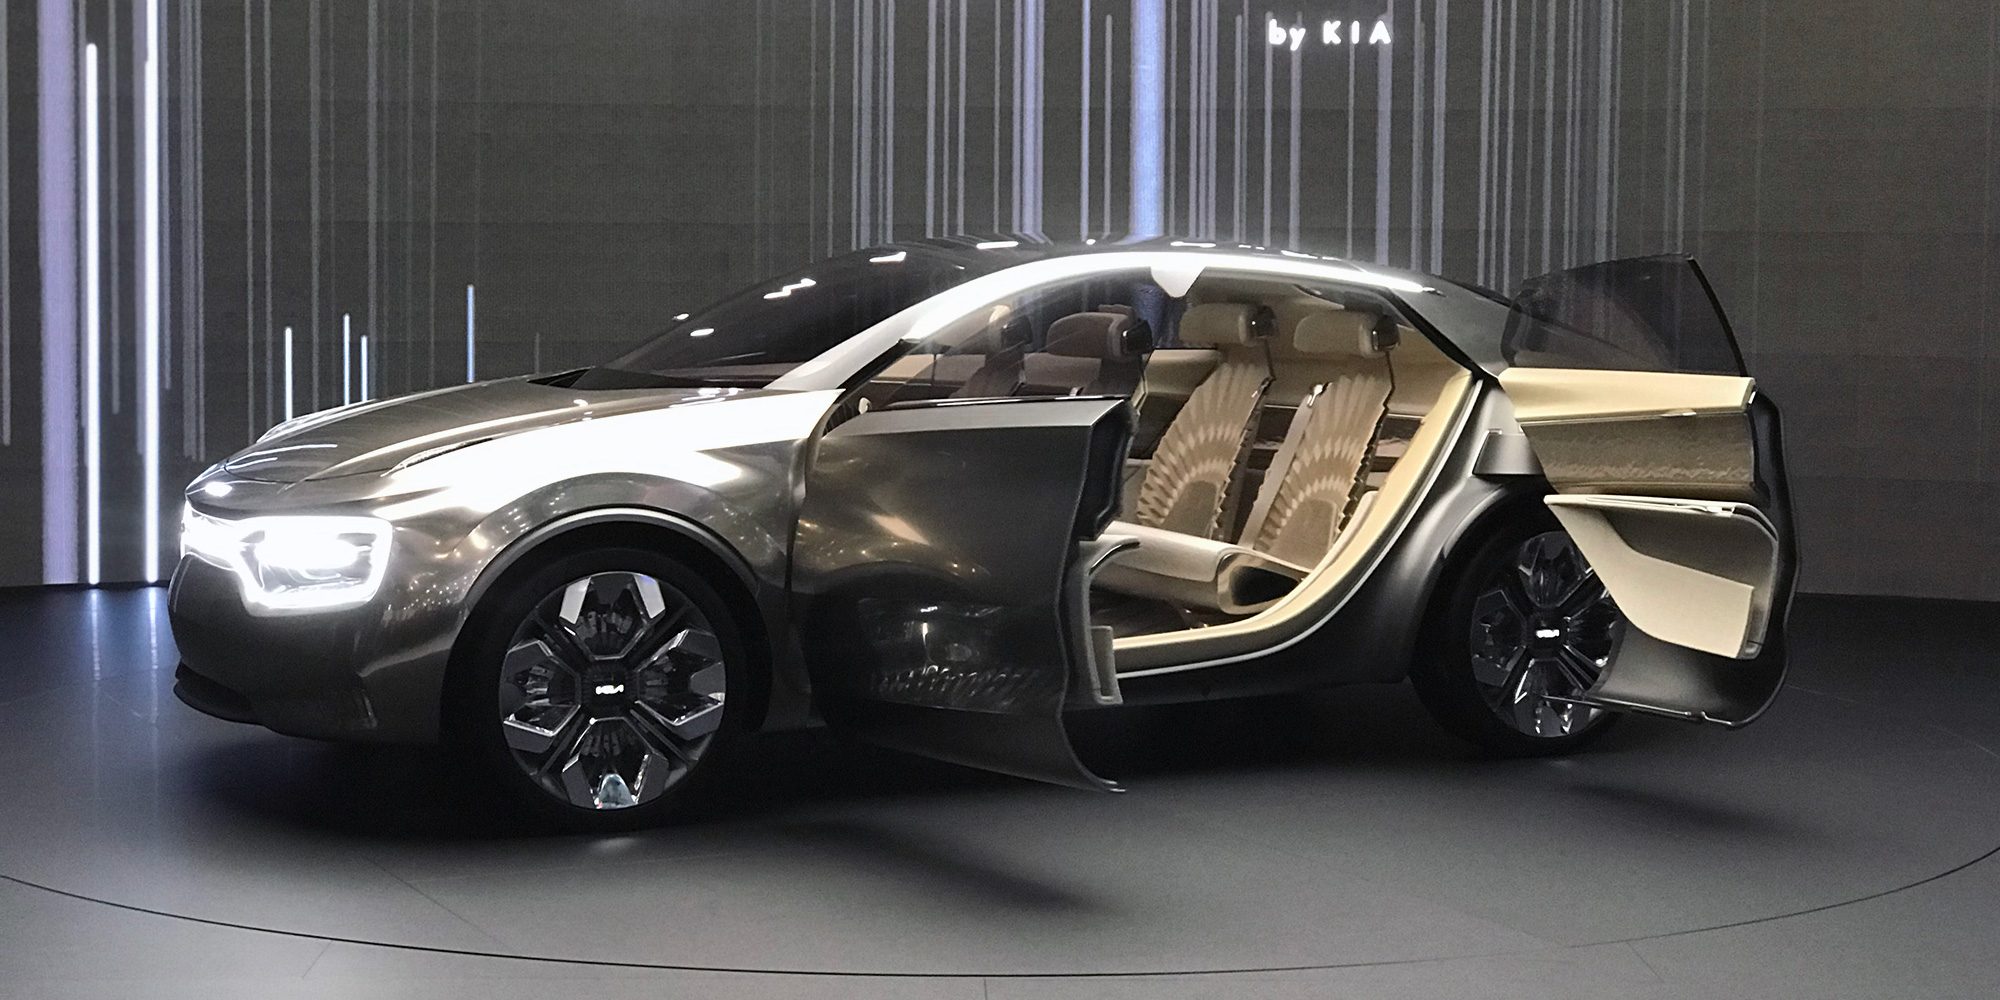 Khái niệm Kia Imagine tại Triển lãm ô tô Geneva 2019